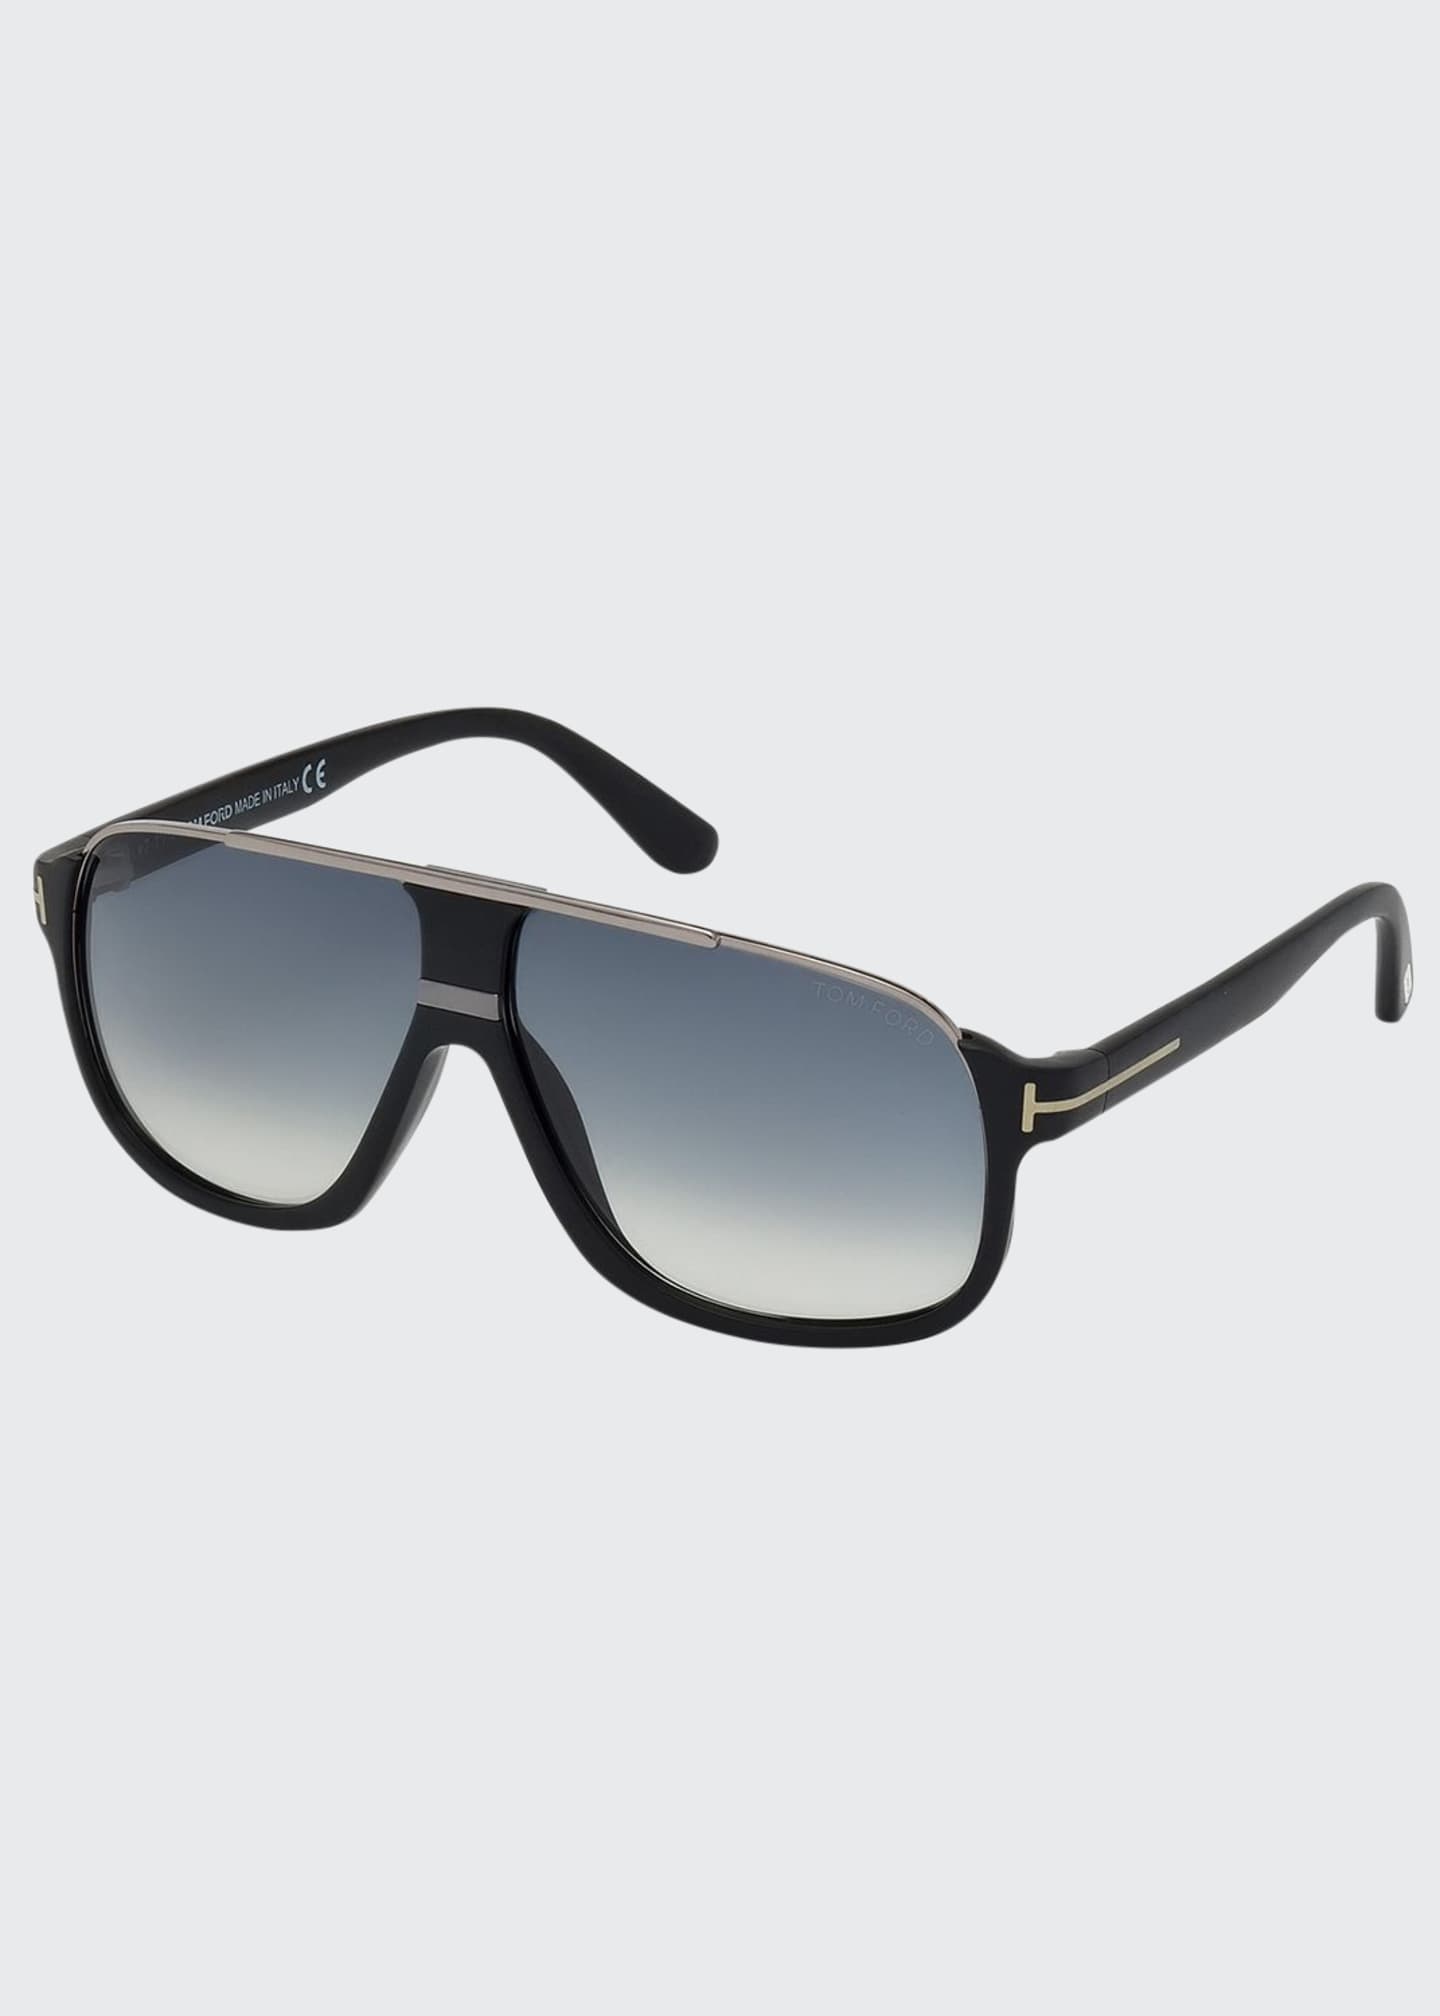 TOM FORD Elliot Universal-Fit Aviator Sunglasses, Shiny Black/Shiny ...